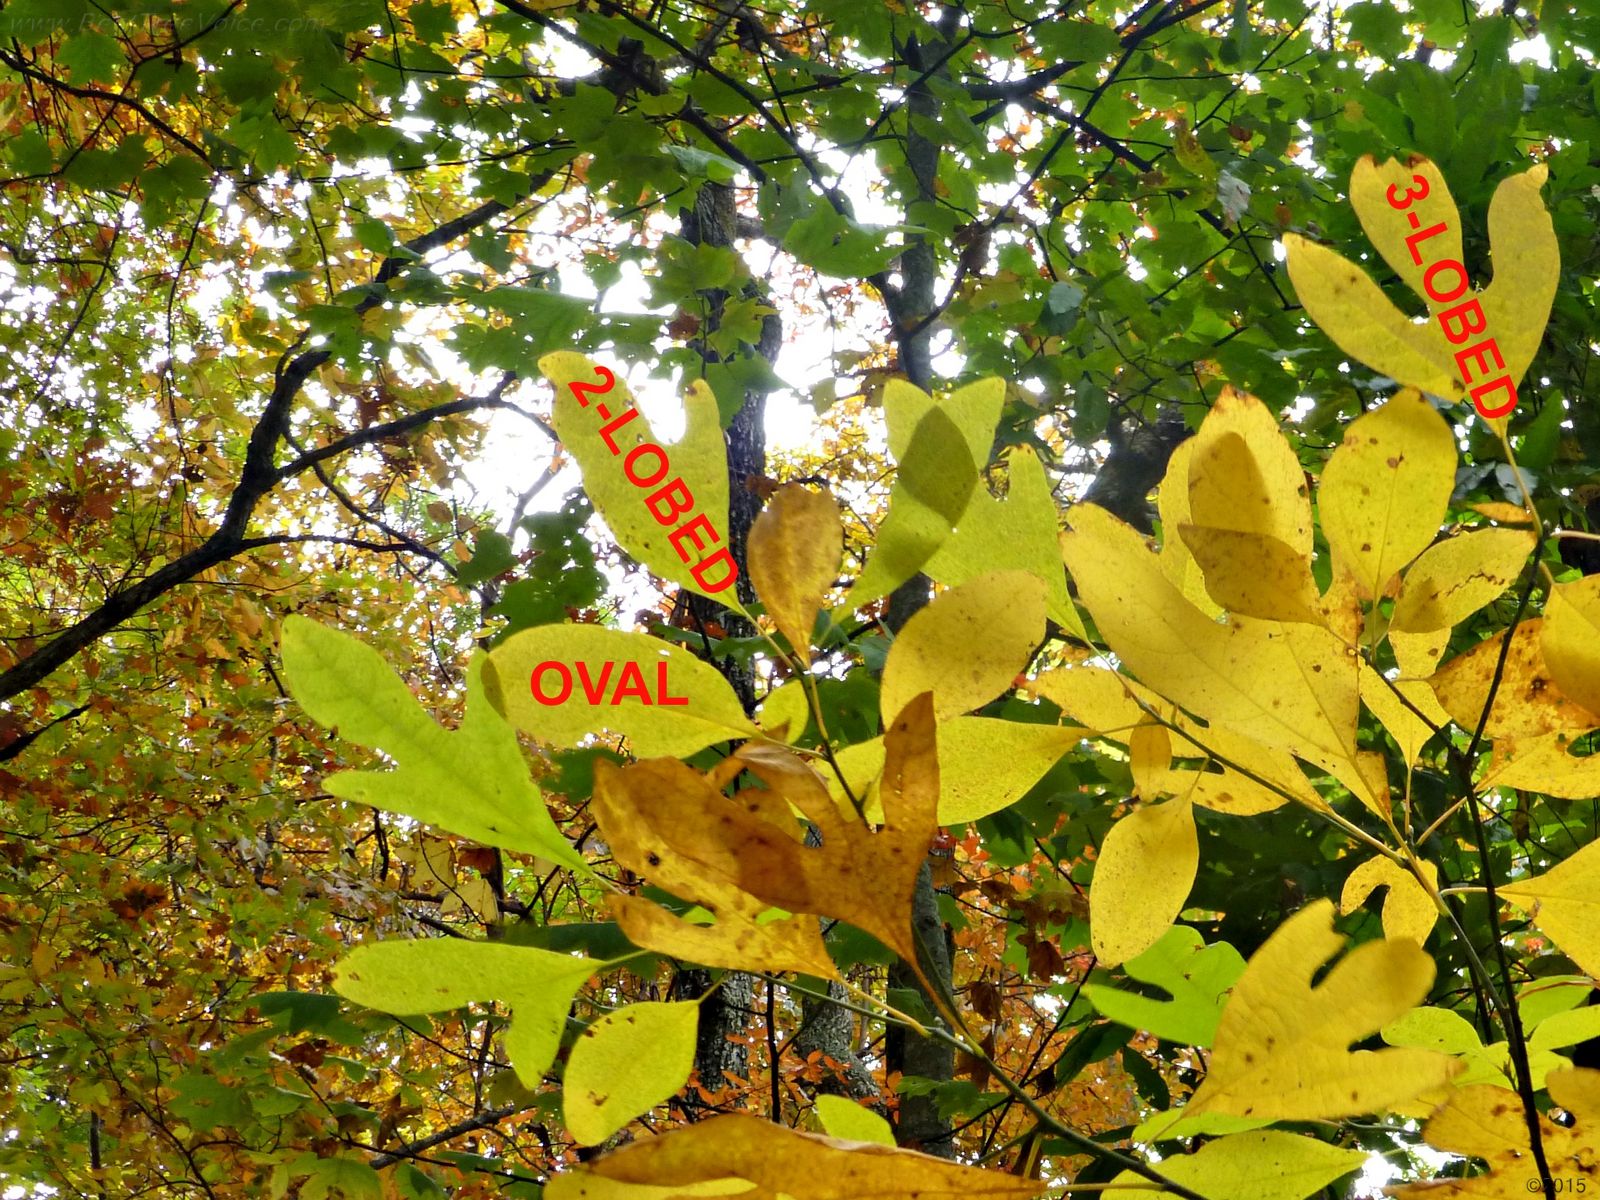 October 24, 2015 - Sassafras leaves in Bent Tree